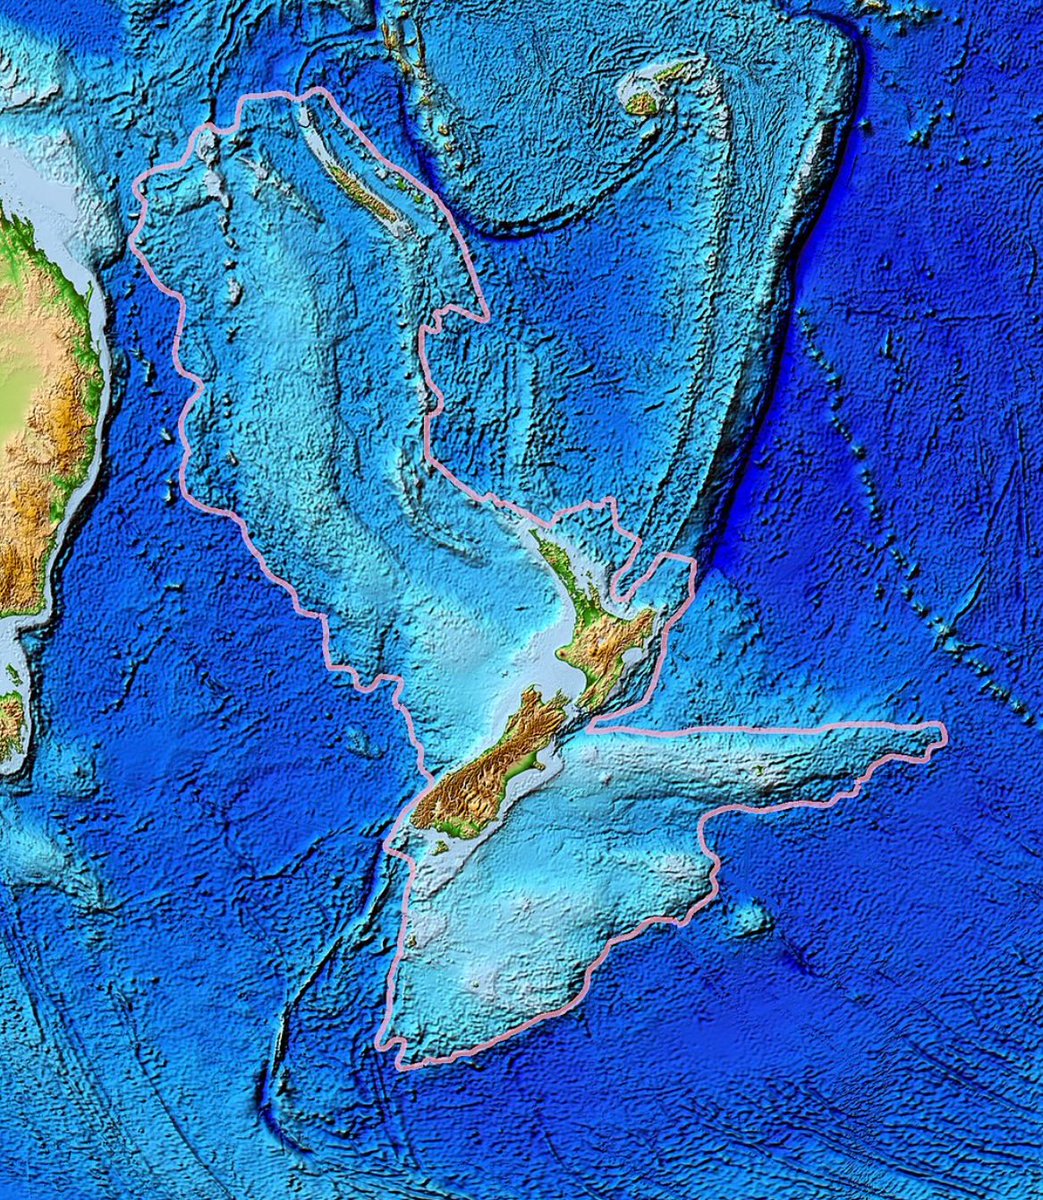 Should New Caledonia and New Zealand be Merged to Create “Zealandia”?